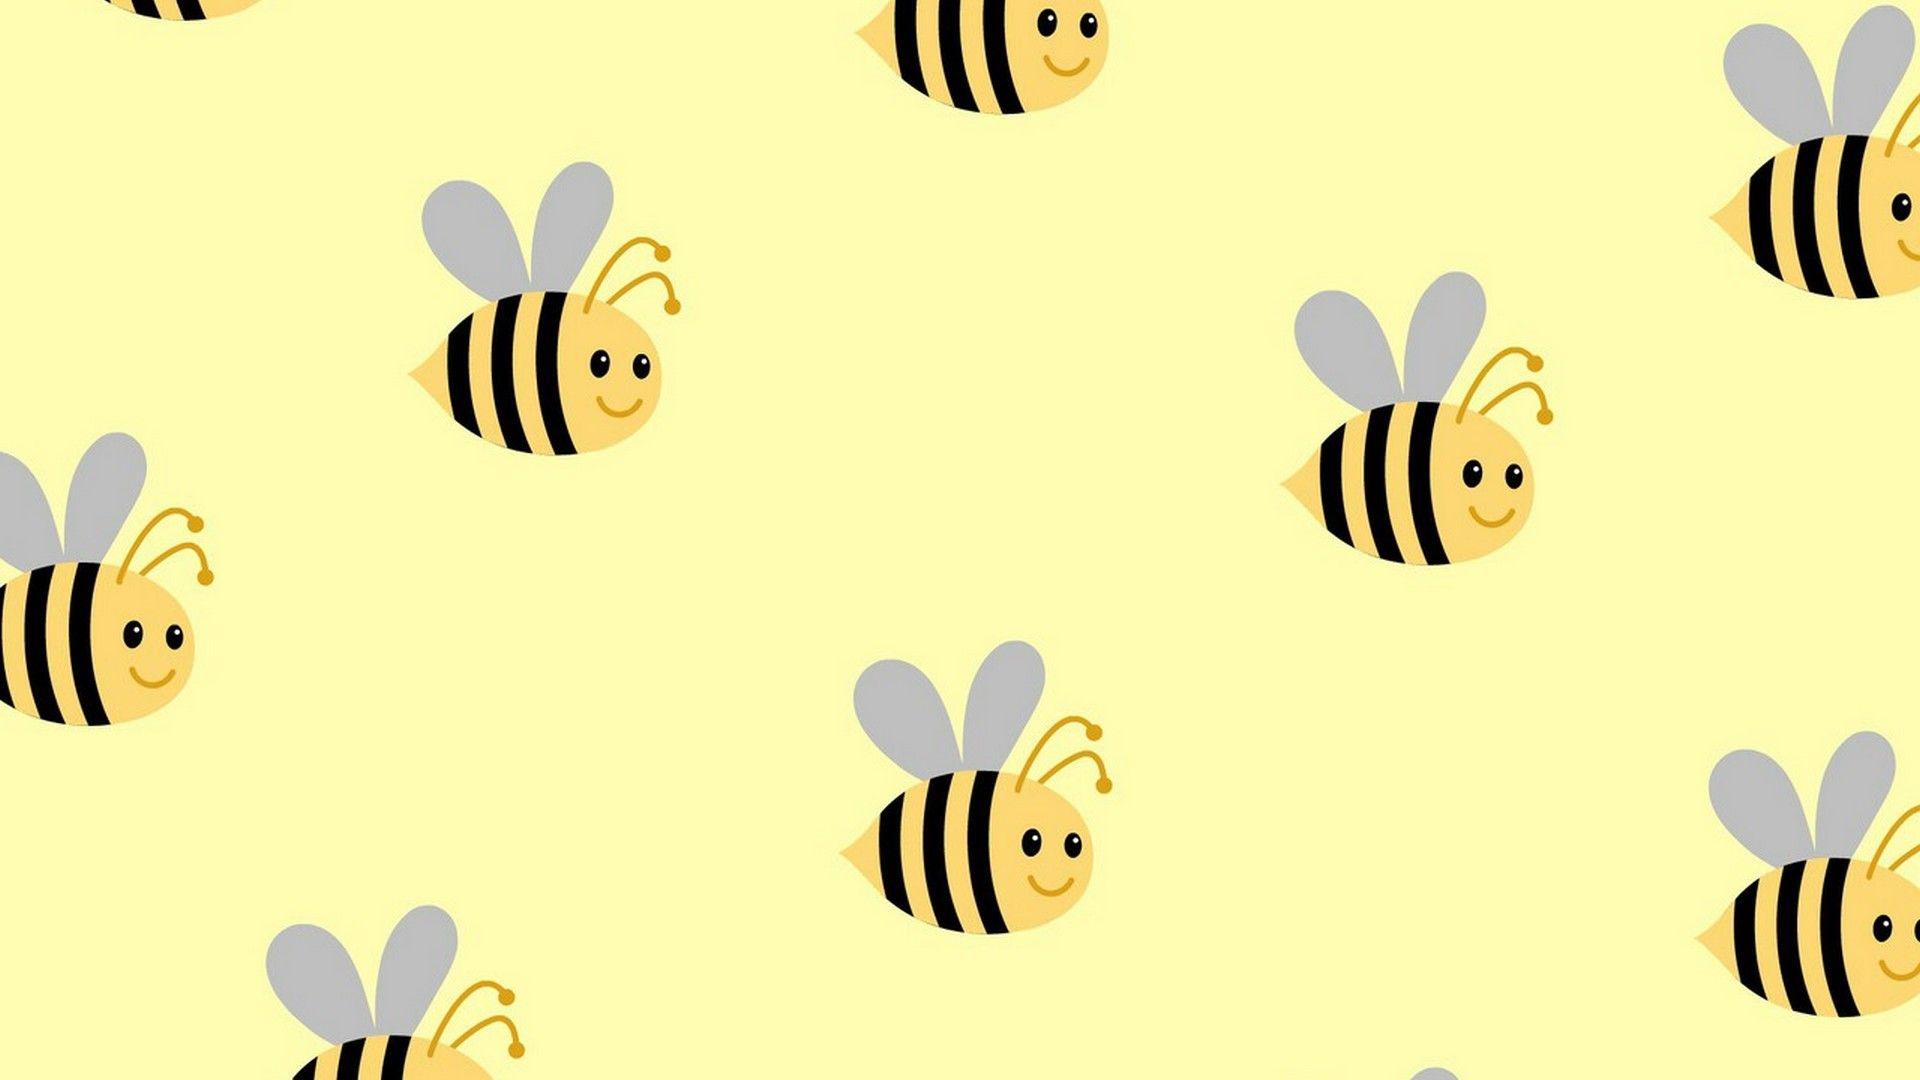 Bee Wallpaper Images  Free Download on Freepik